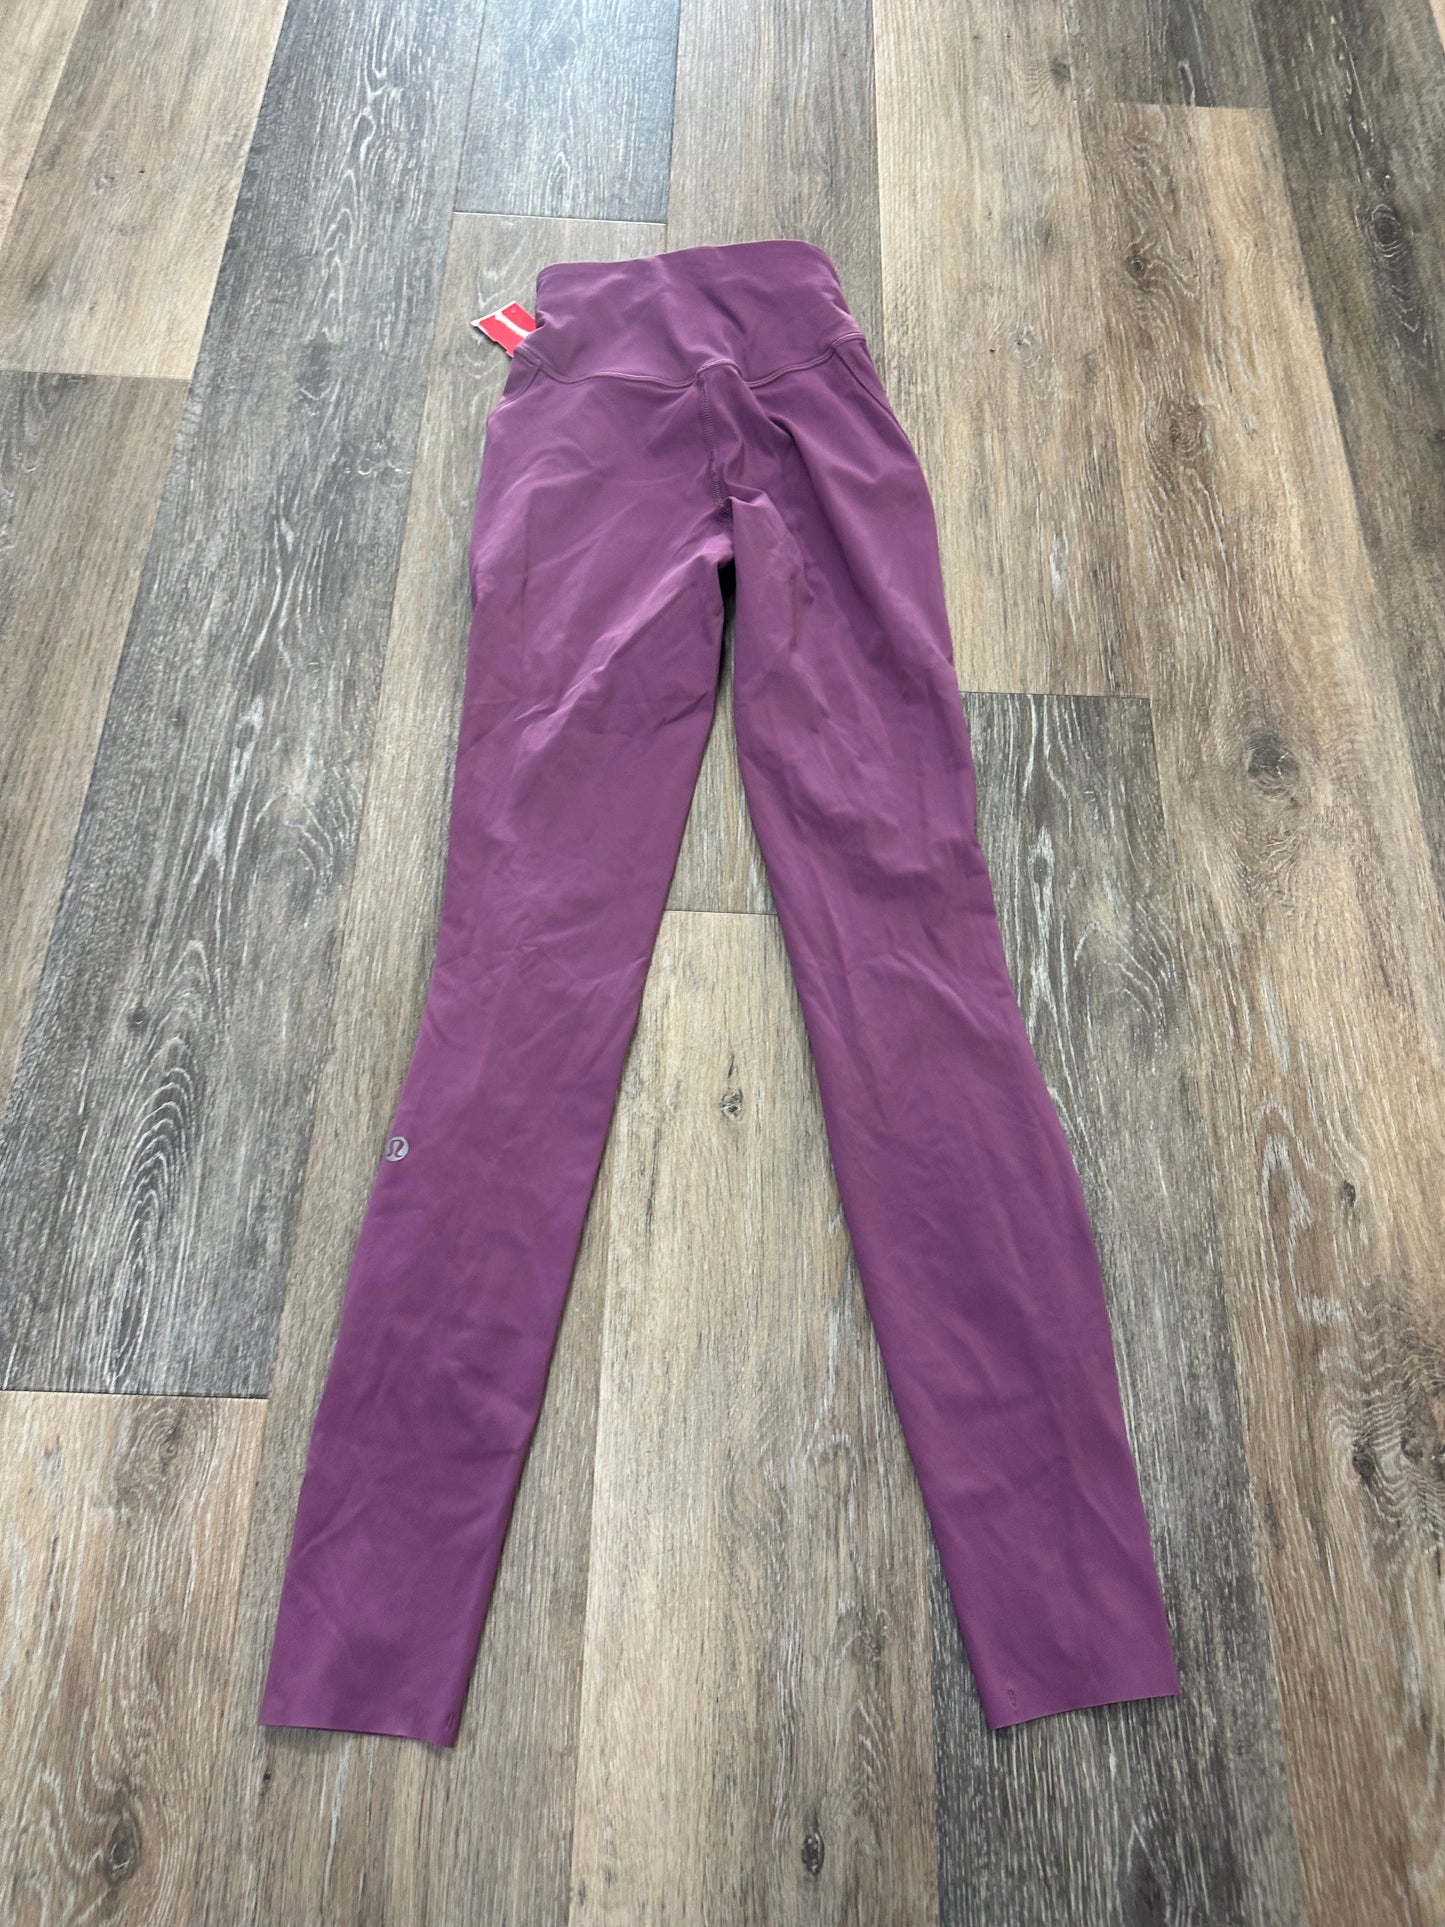 Purple Athletic Pants Lululemon, Size 0